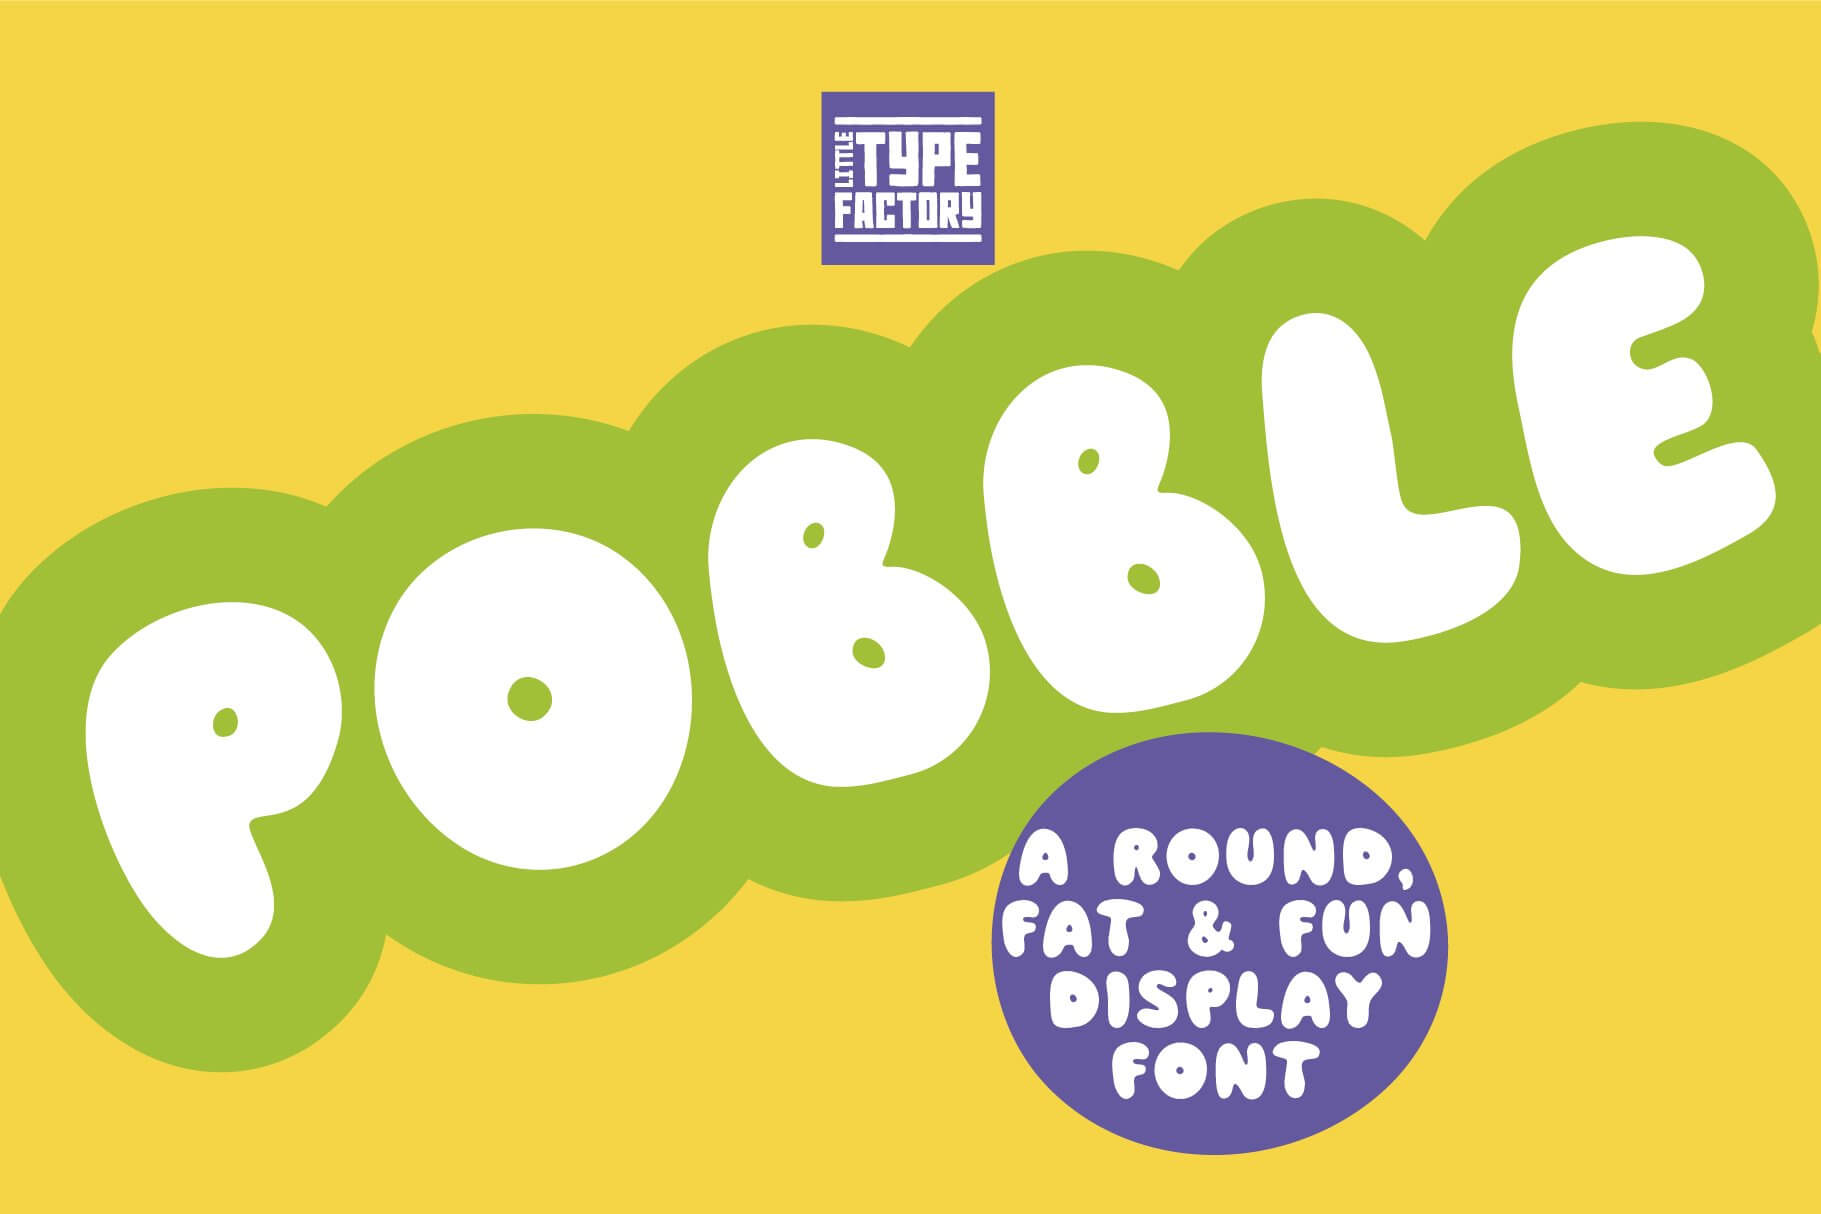 pobble amazing fat cartoon comic font.